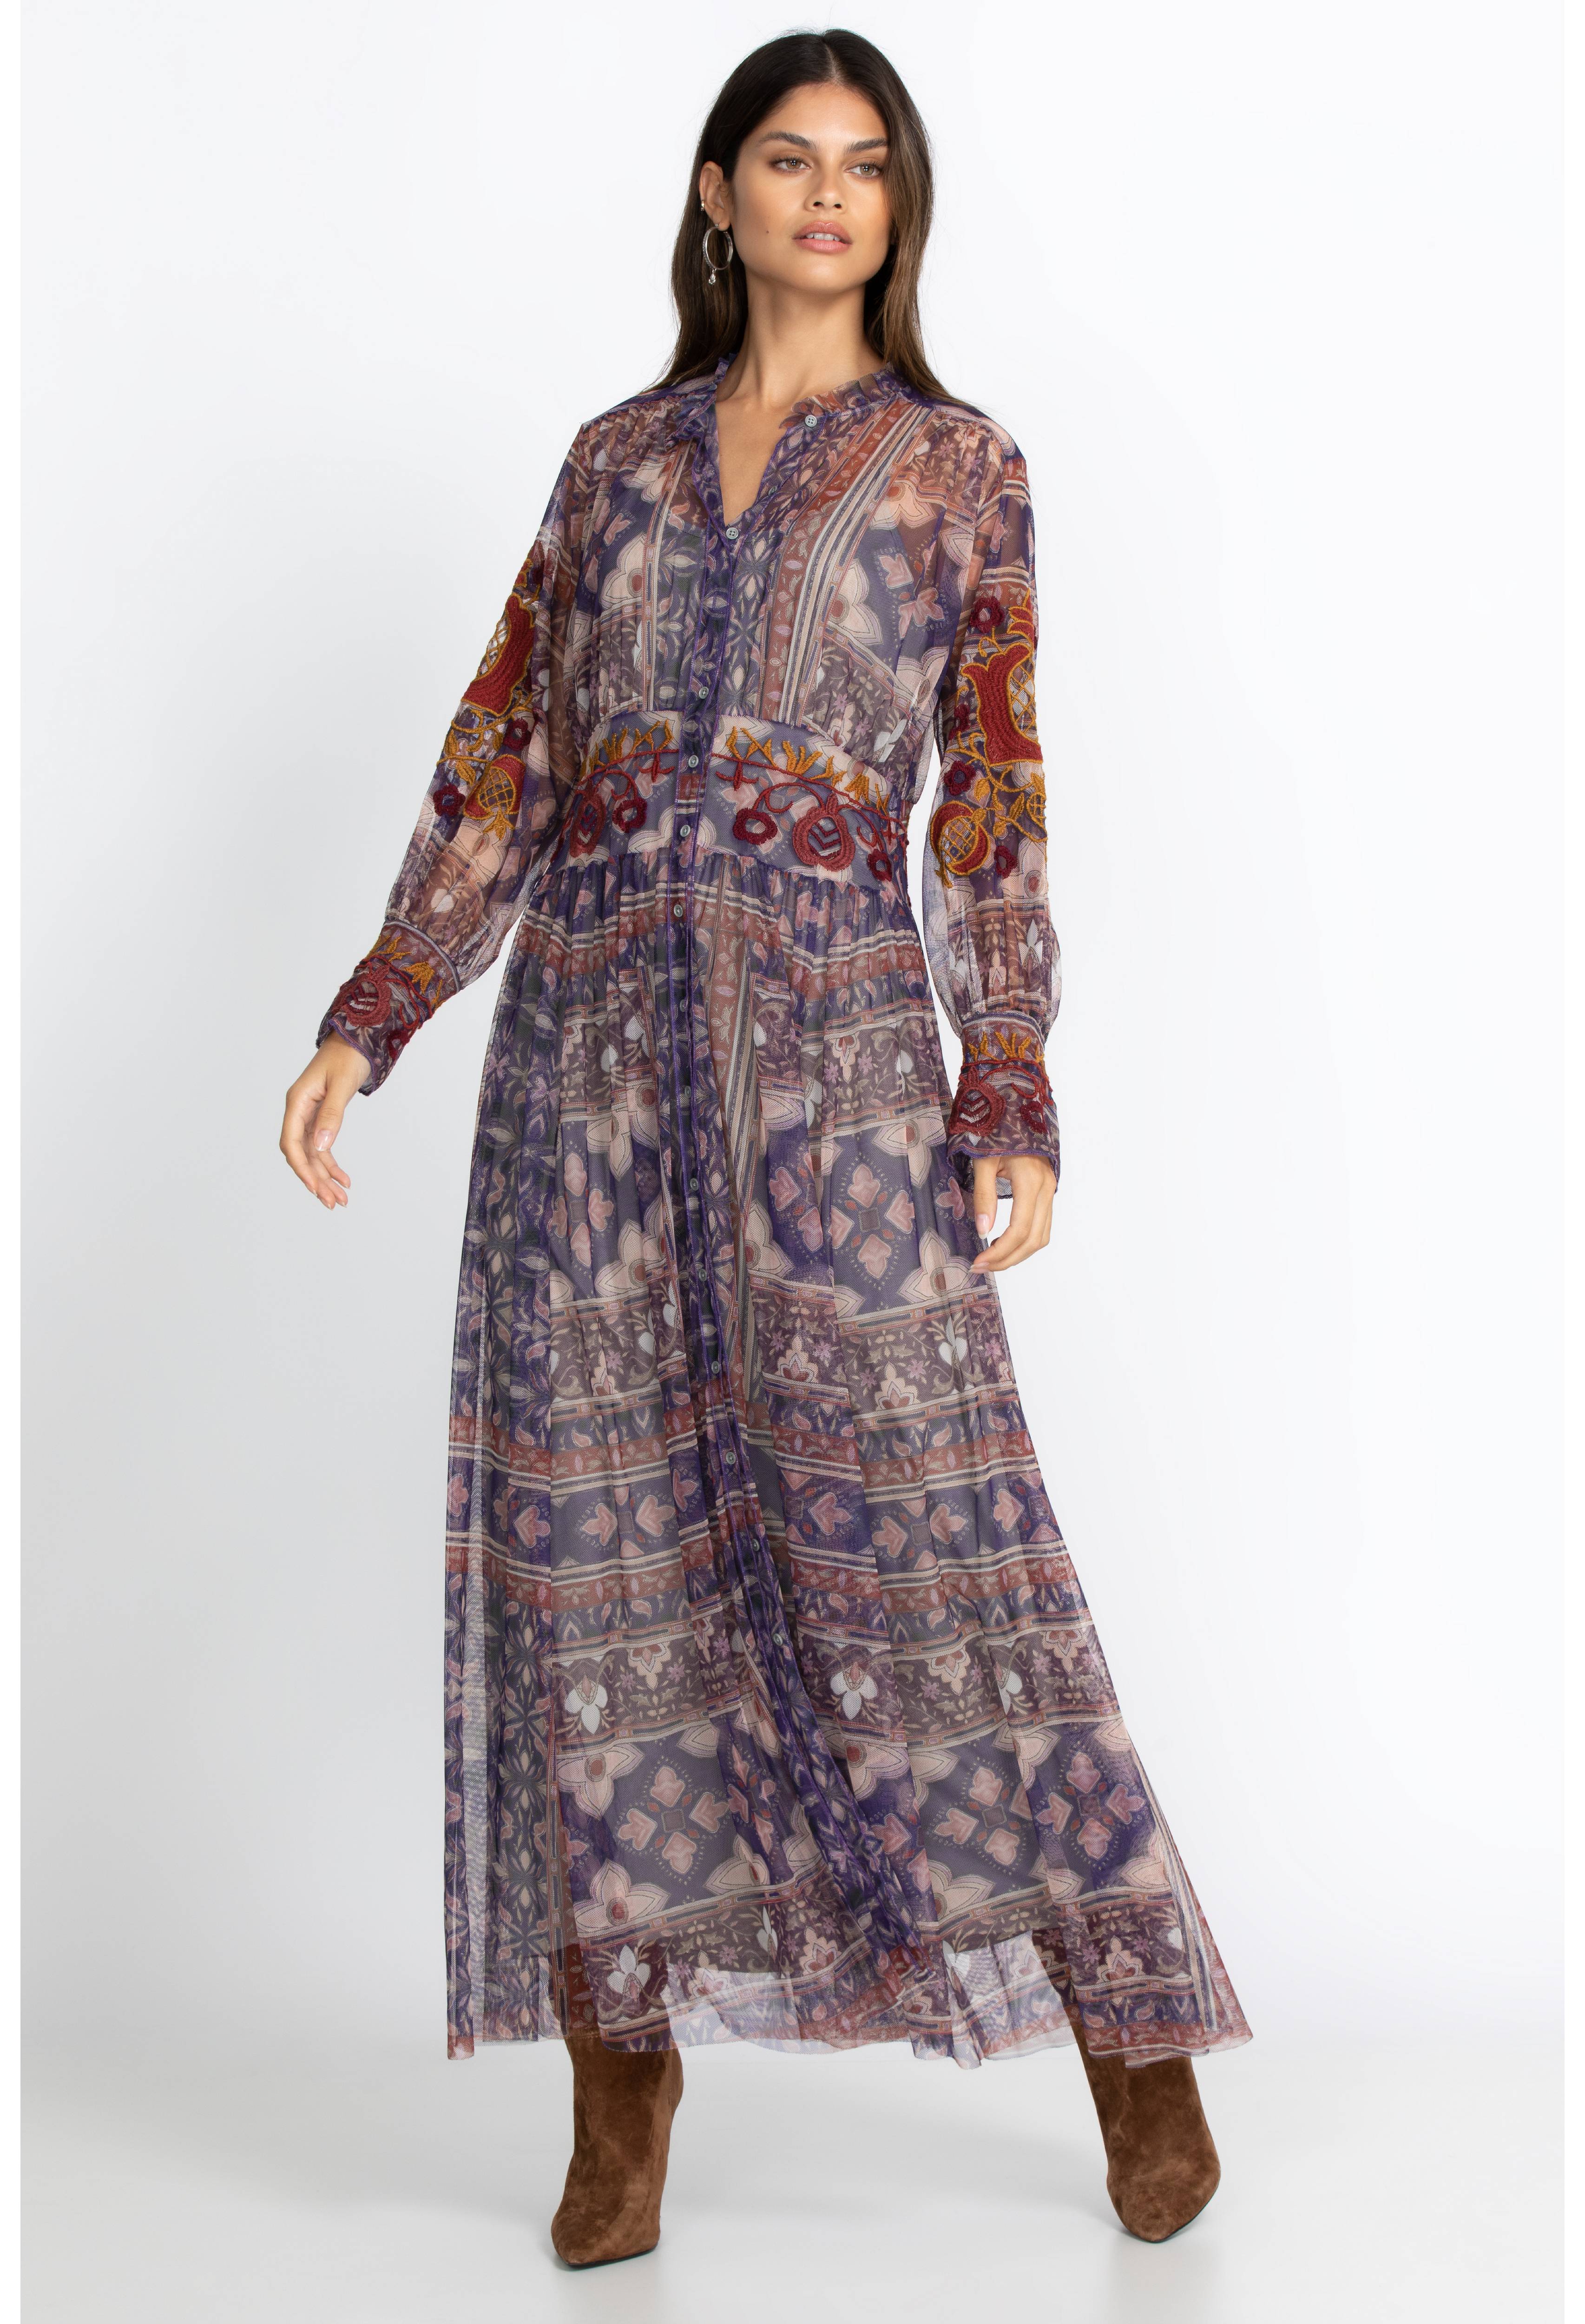 Duana Mesh Dress, , large image number 1